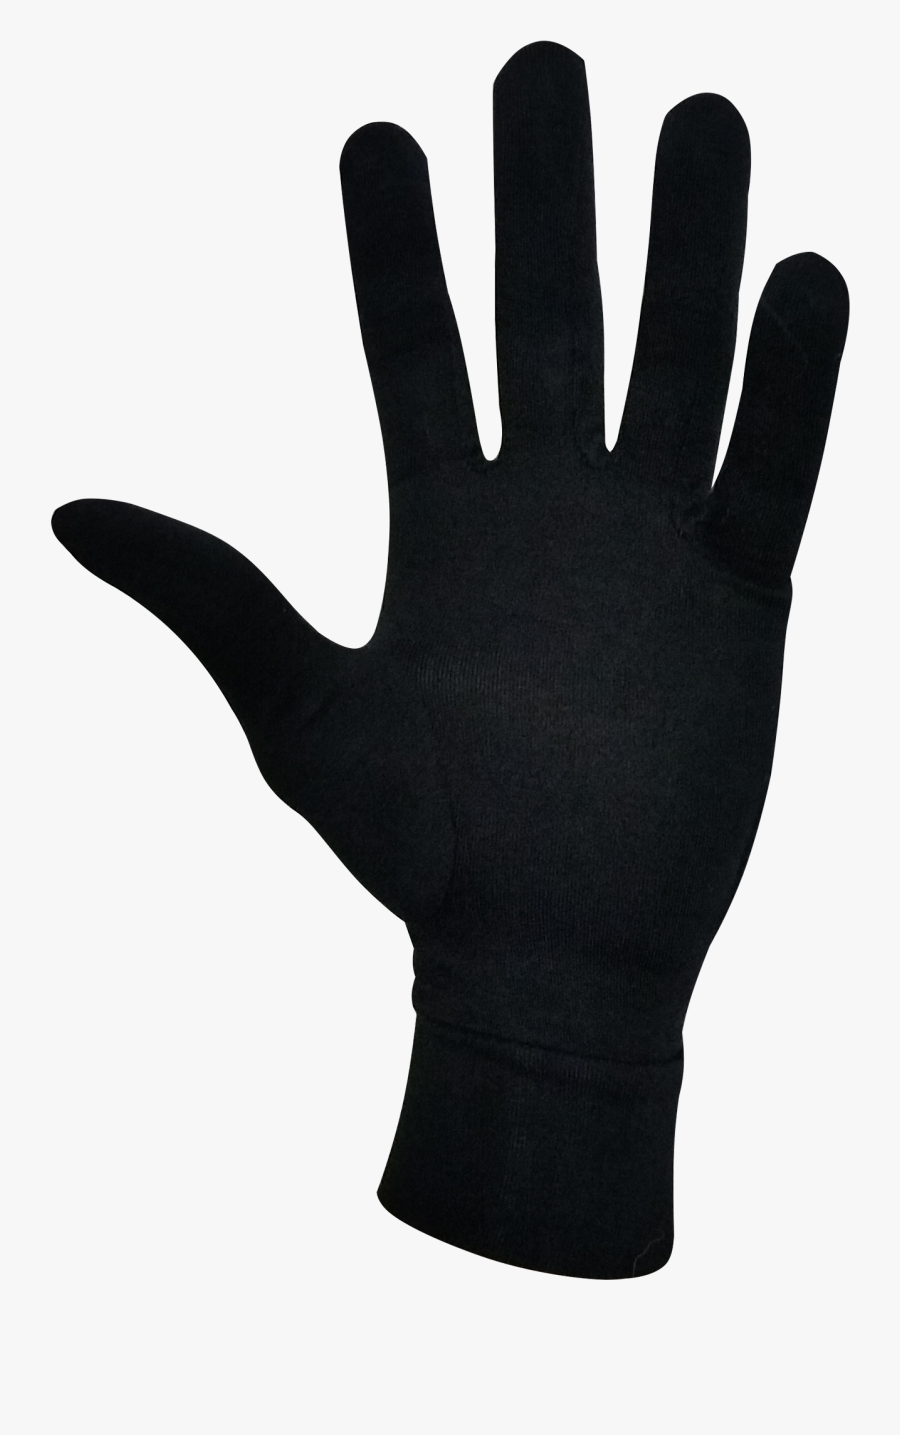 Gloves Png - Glove, Transparent Clipart